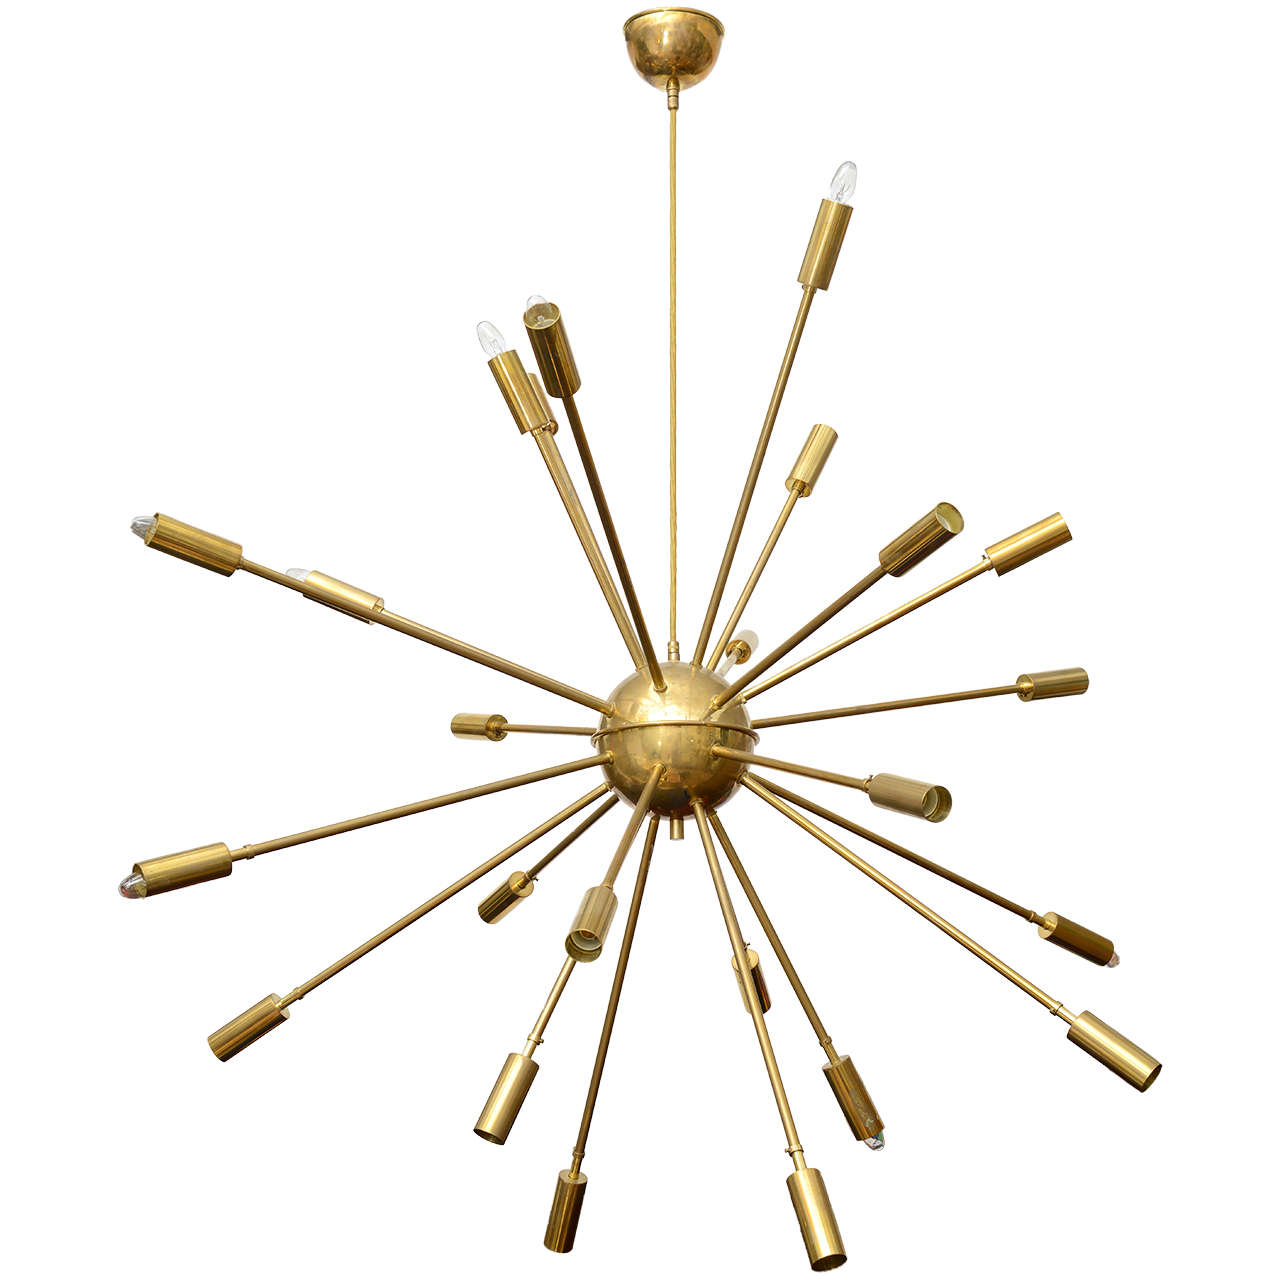 Italian Mid-Century Modern 24-Arm Original Brass Sputnik Chandelier by Stilnovo